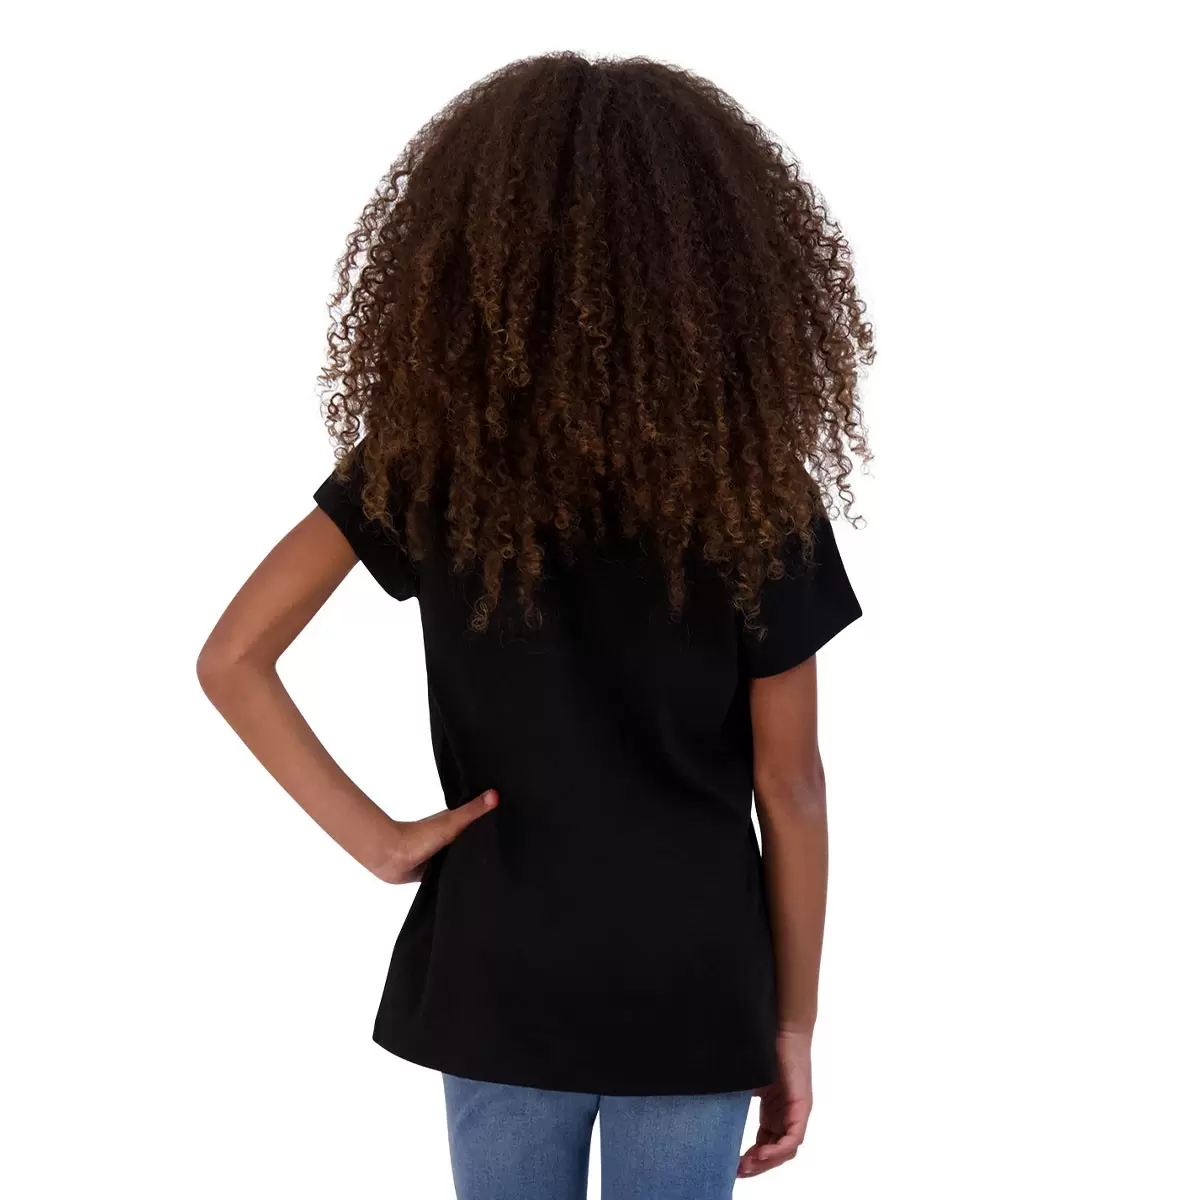 Disney 一百週年紀念兒童短袖上衣 黑 Minnie 女童 6